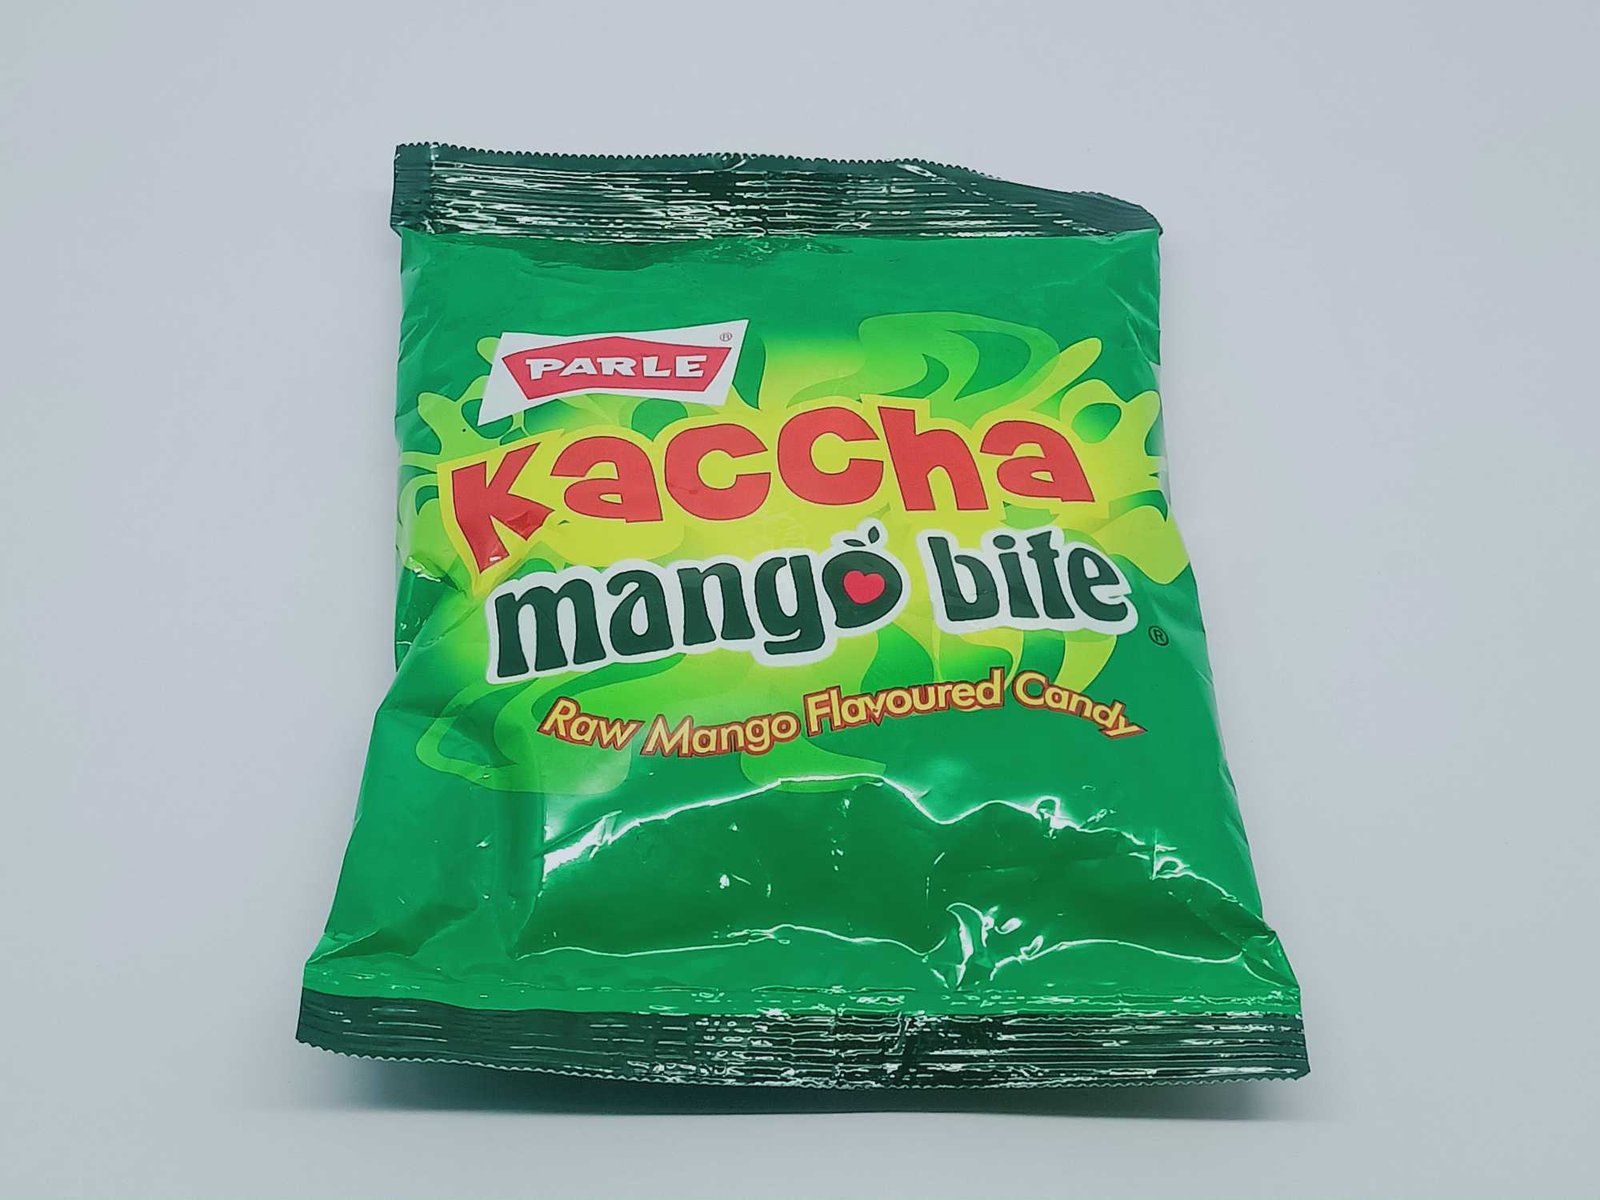 Parle Kaccha Mango Bite Raw Mango Flavoured Candy, 277 gram